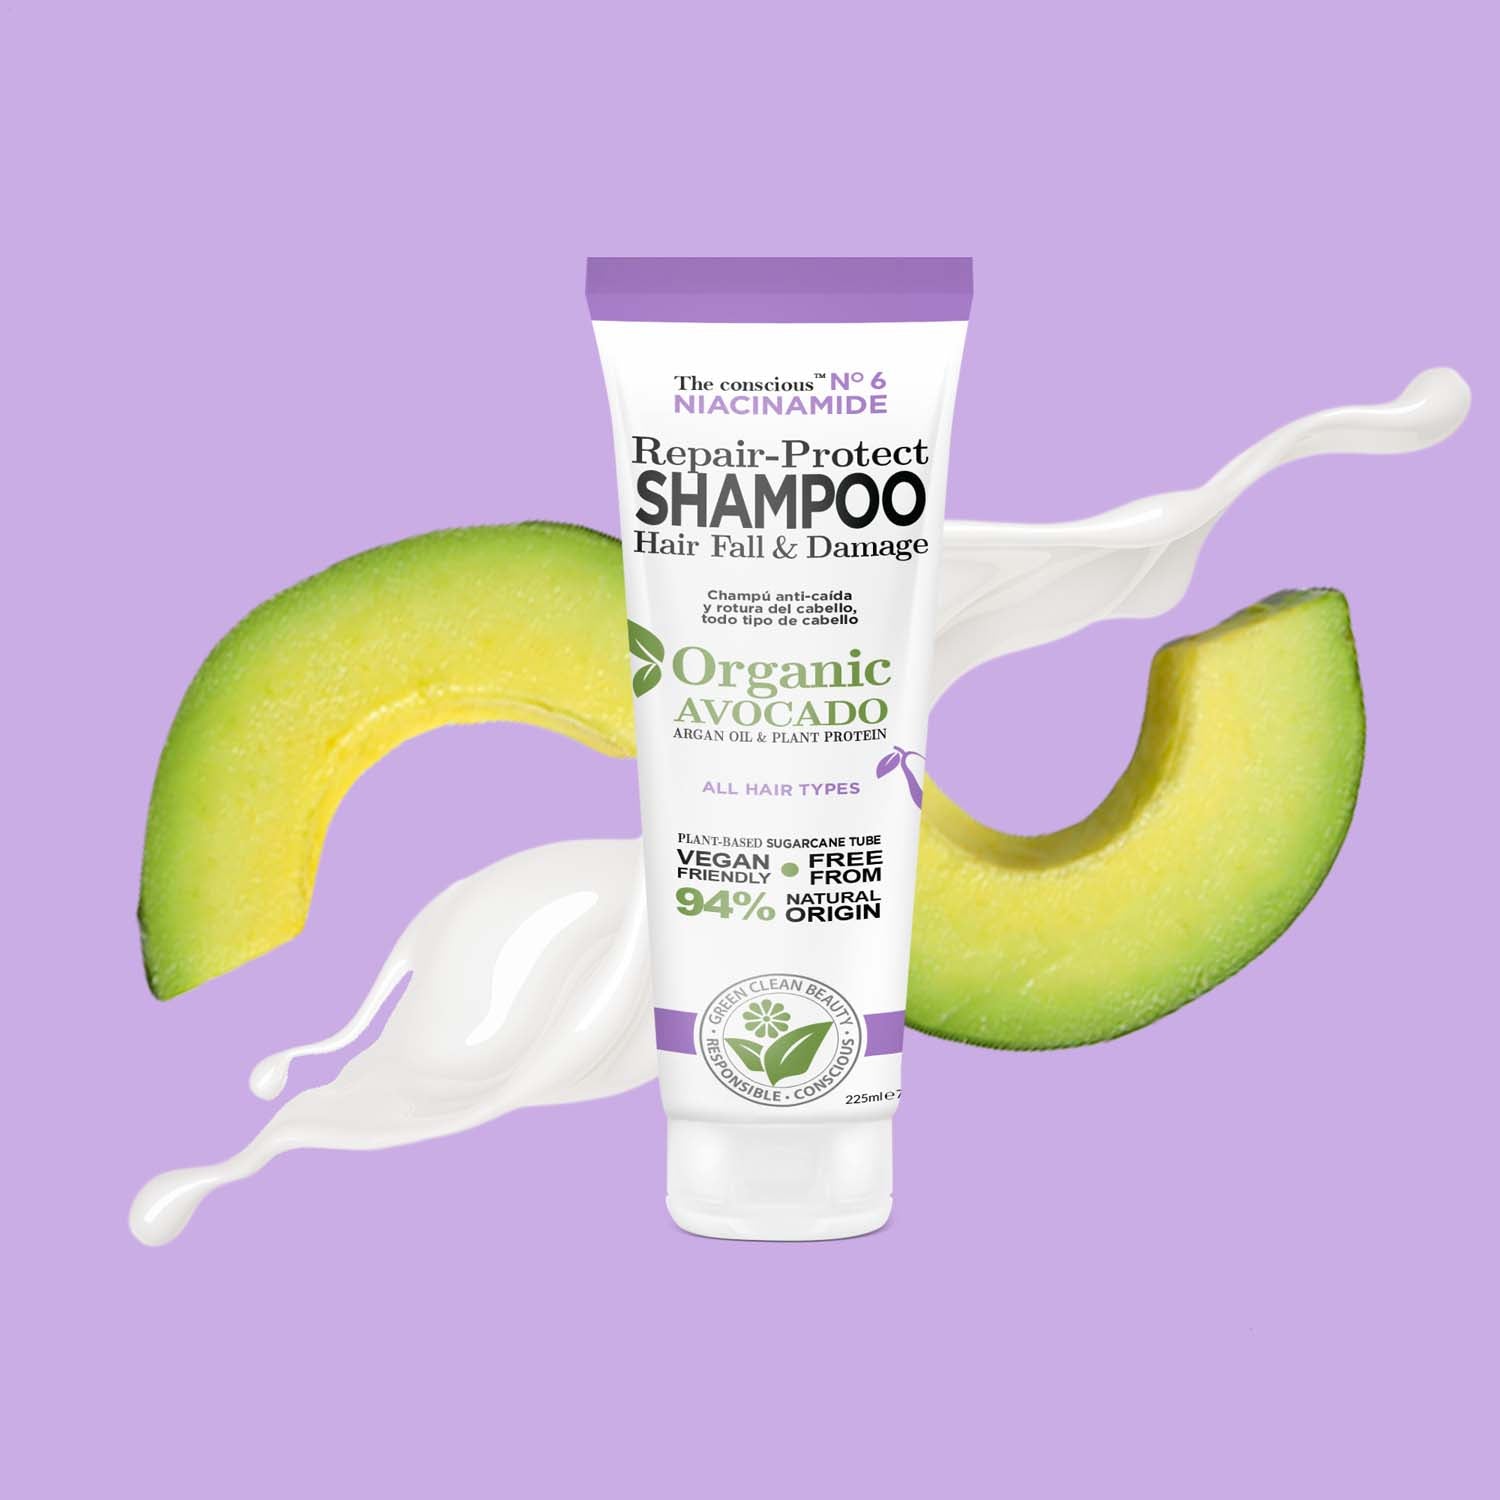 The conscious™ Niacinamide Repair-Protect Shampoo Hair Fall &amp; Damage Organic Avocado